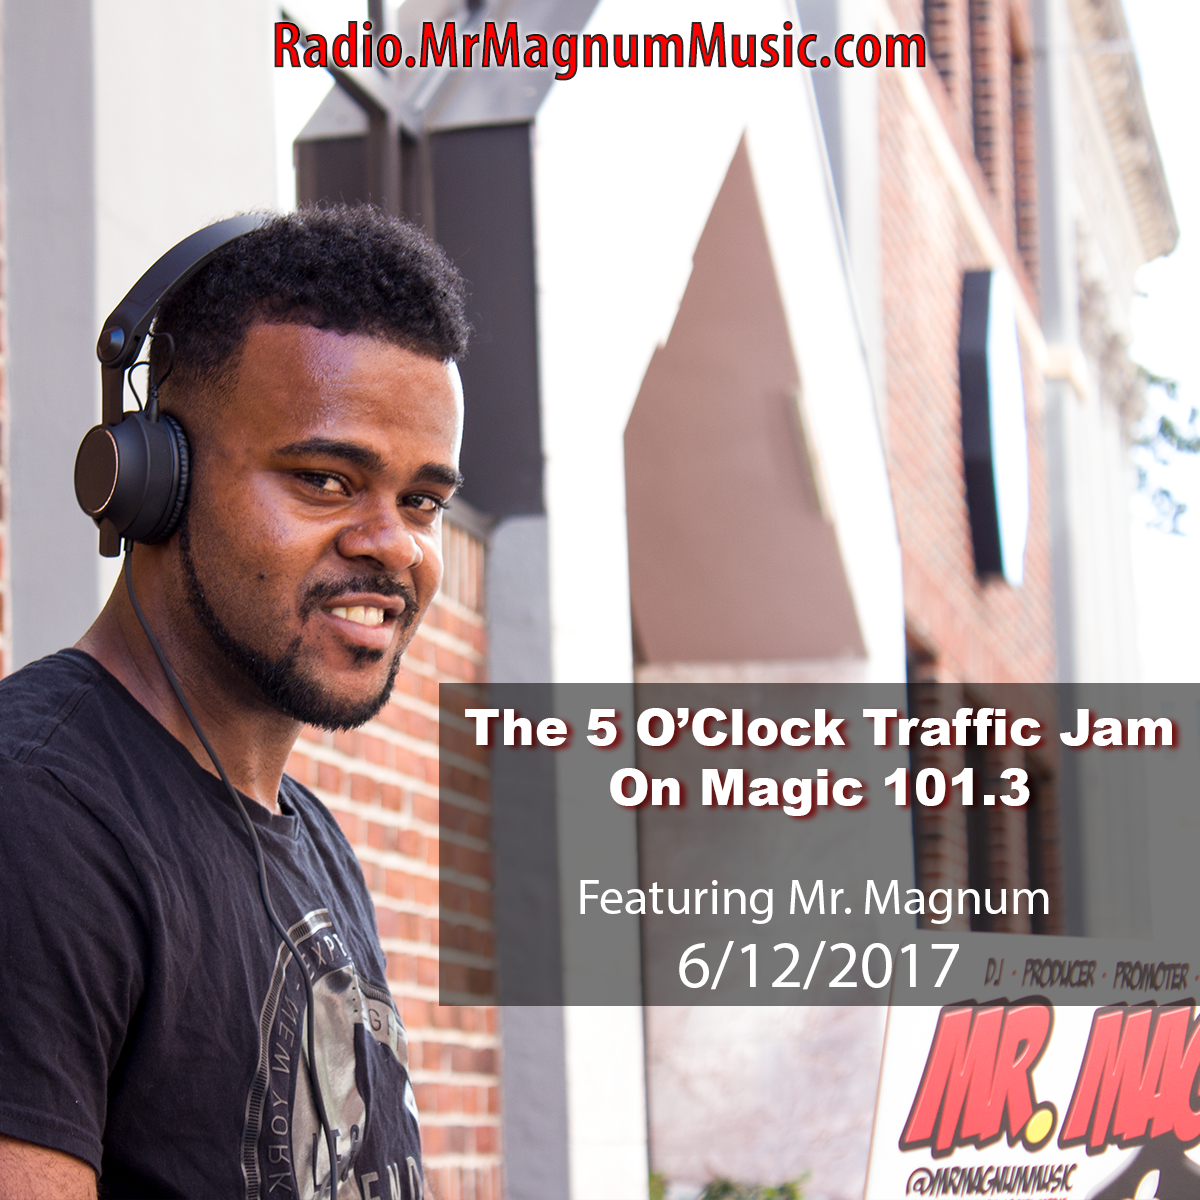 The 5 O'Clock Traffic Jam 20170612 featuring Gainesville's #1 DJ, Mr. Magnum on Magic 101.3